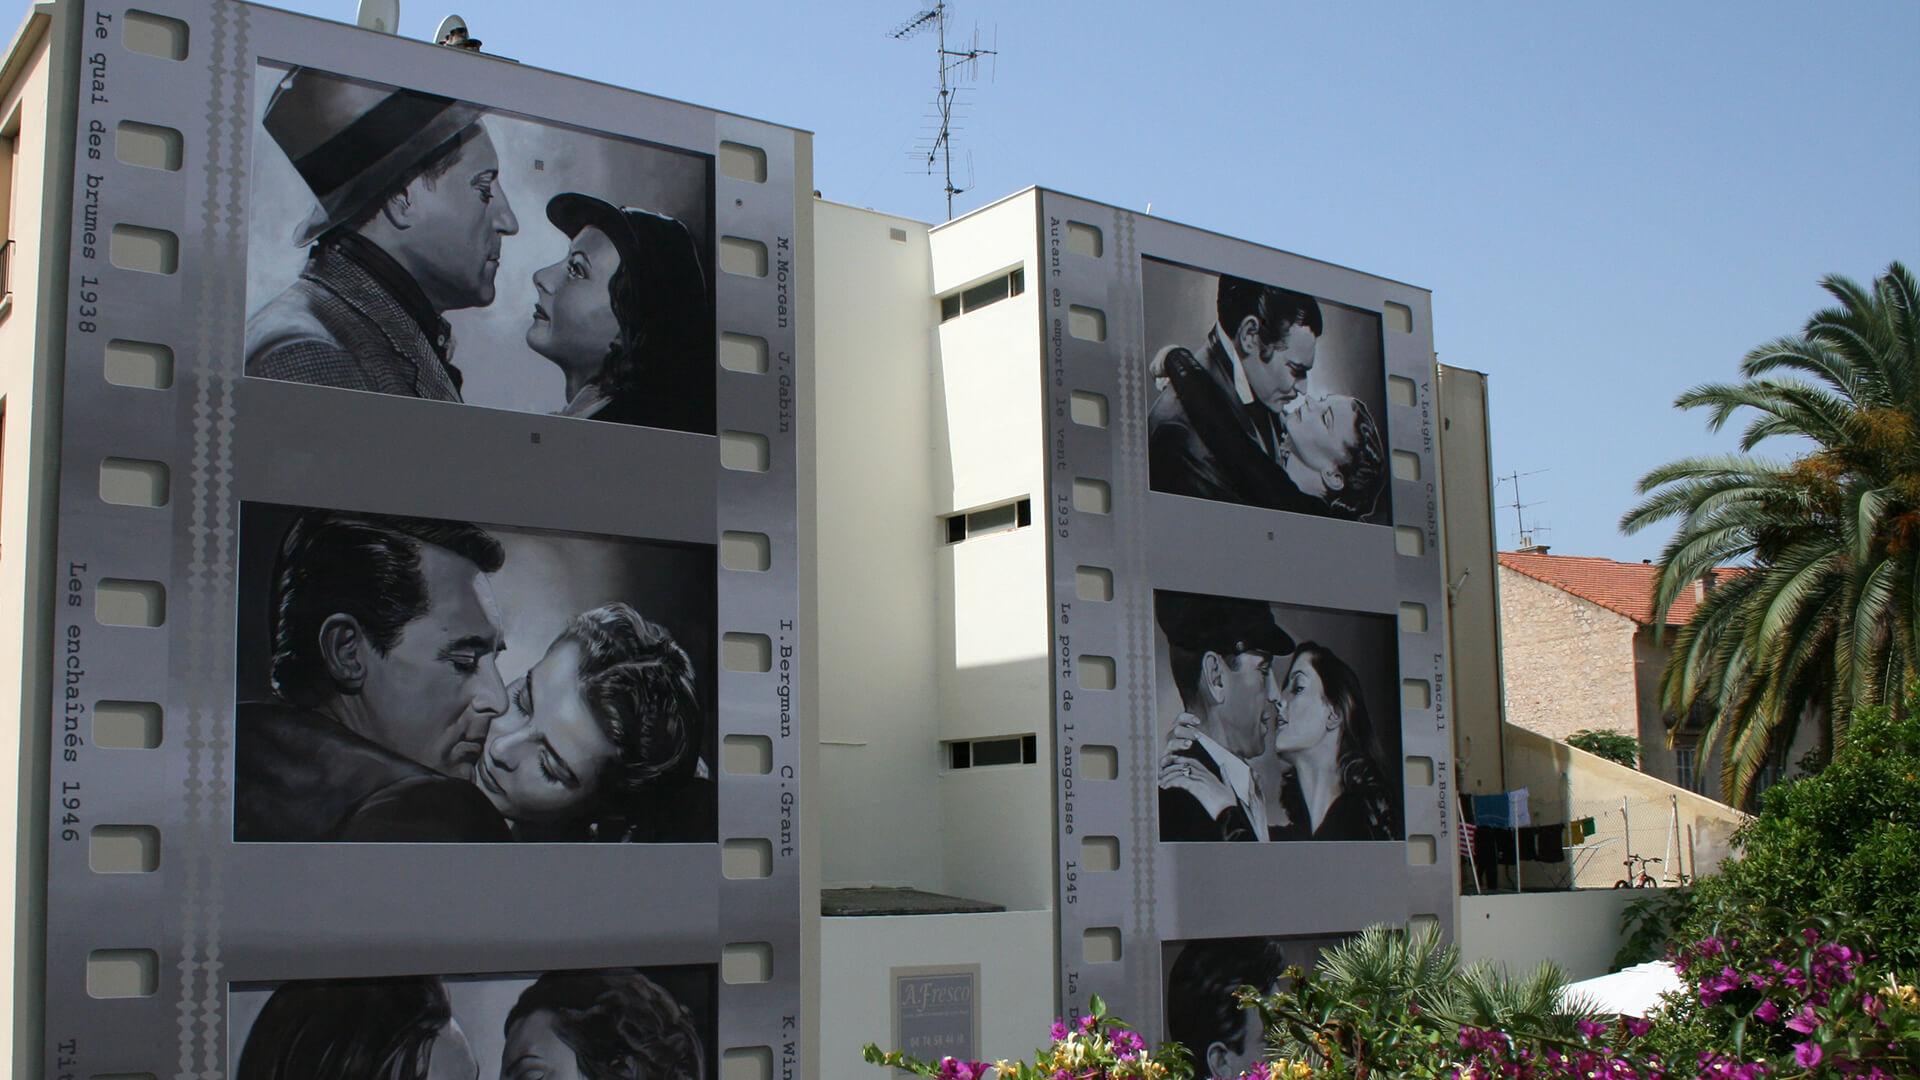 Movie kisses